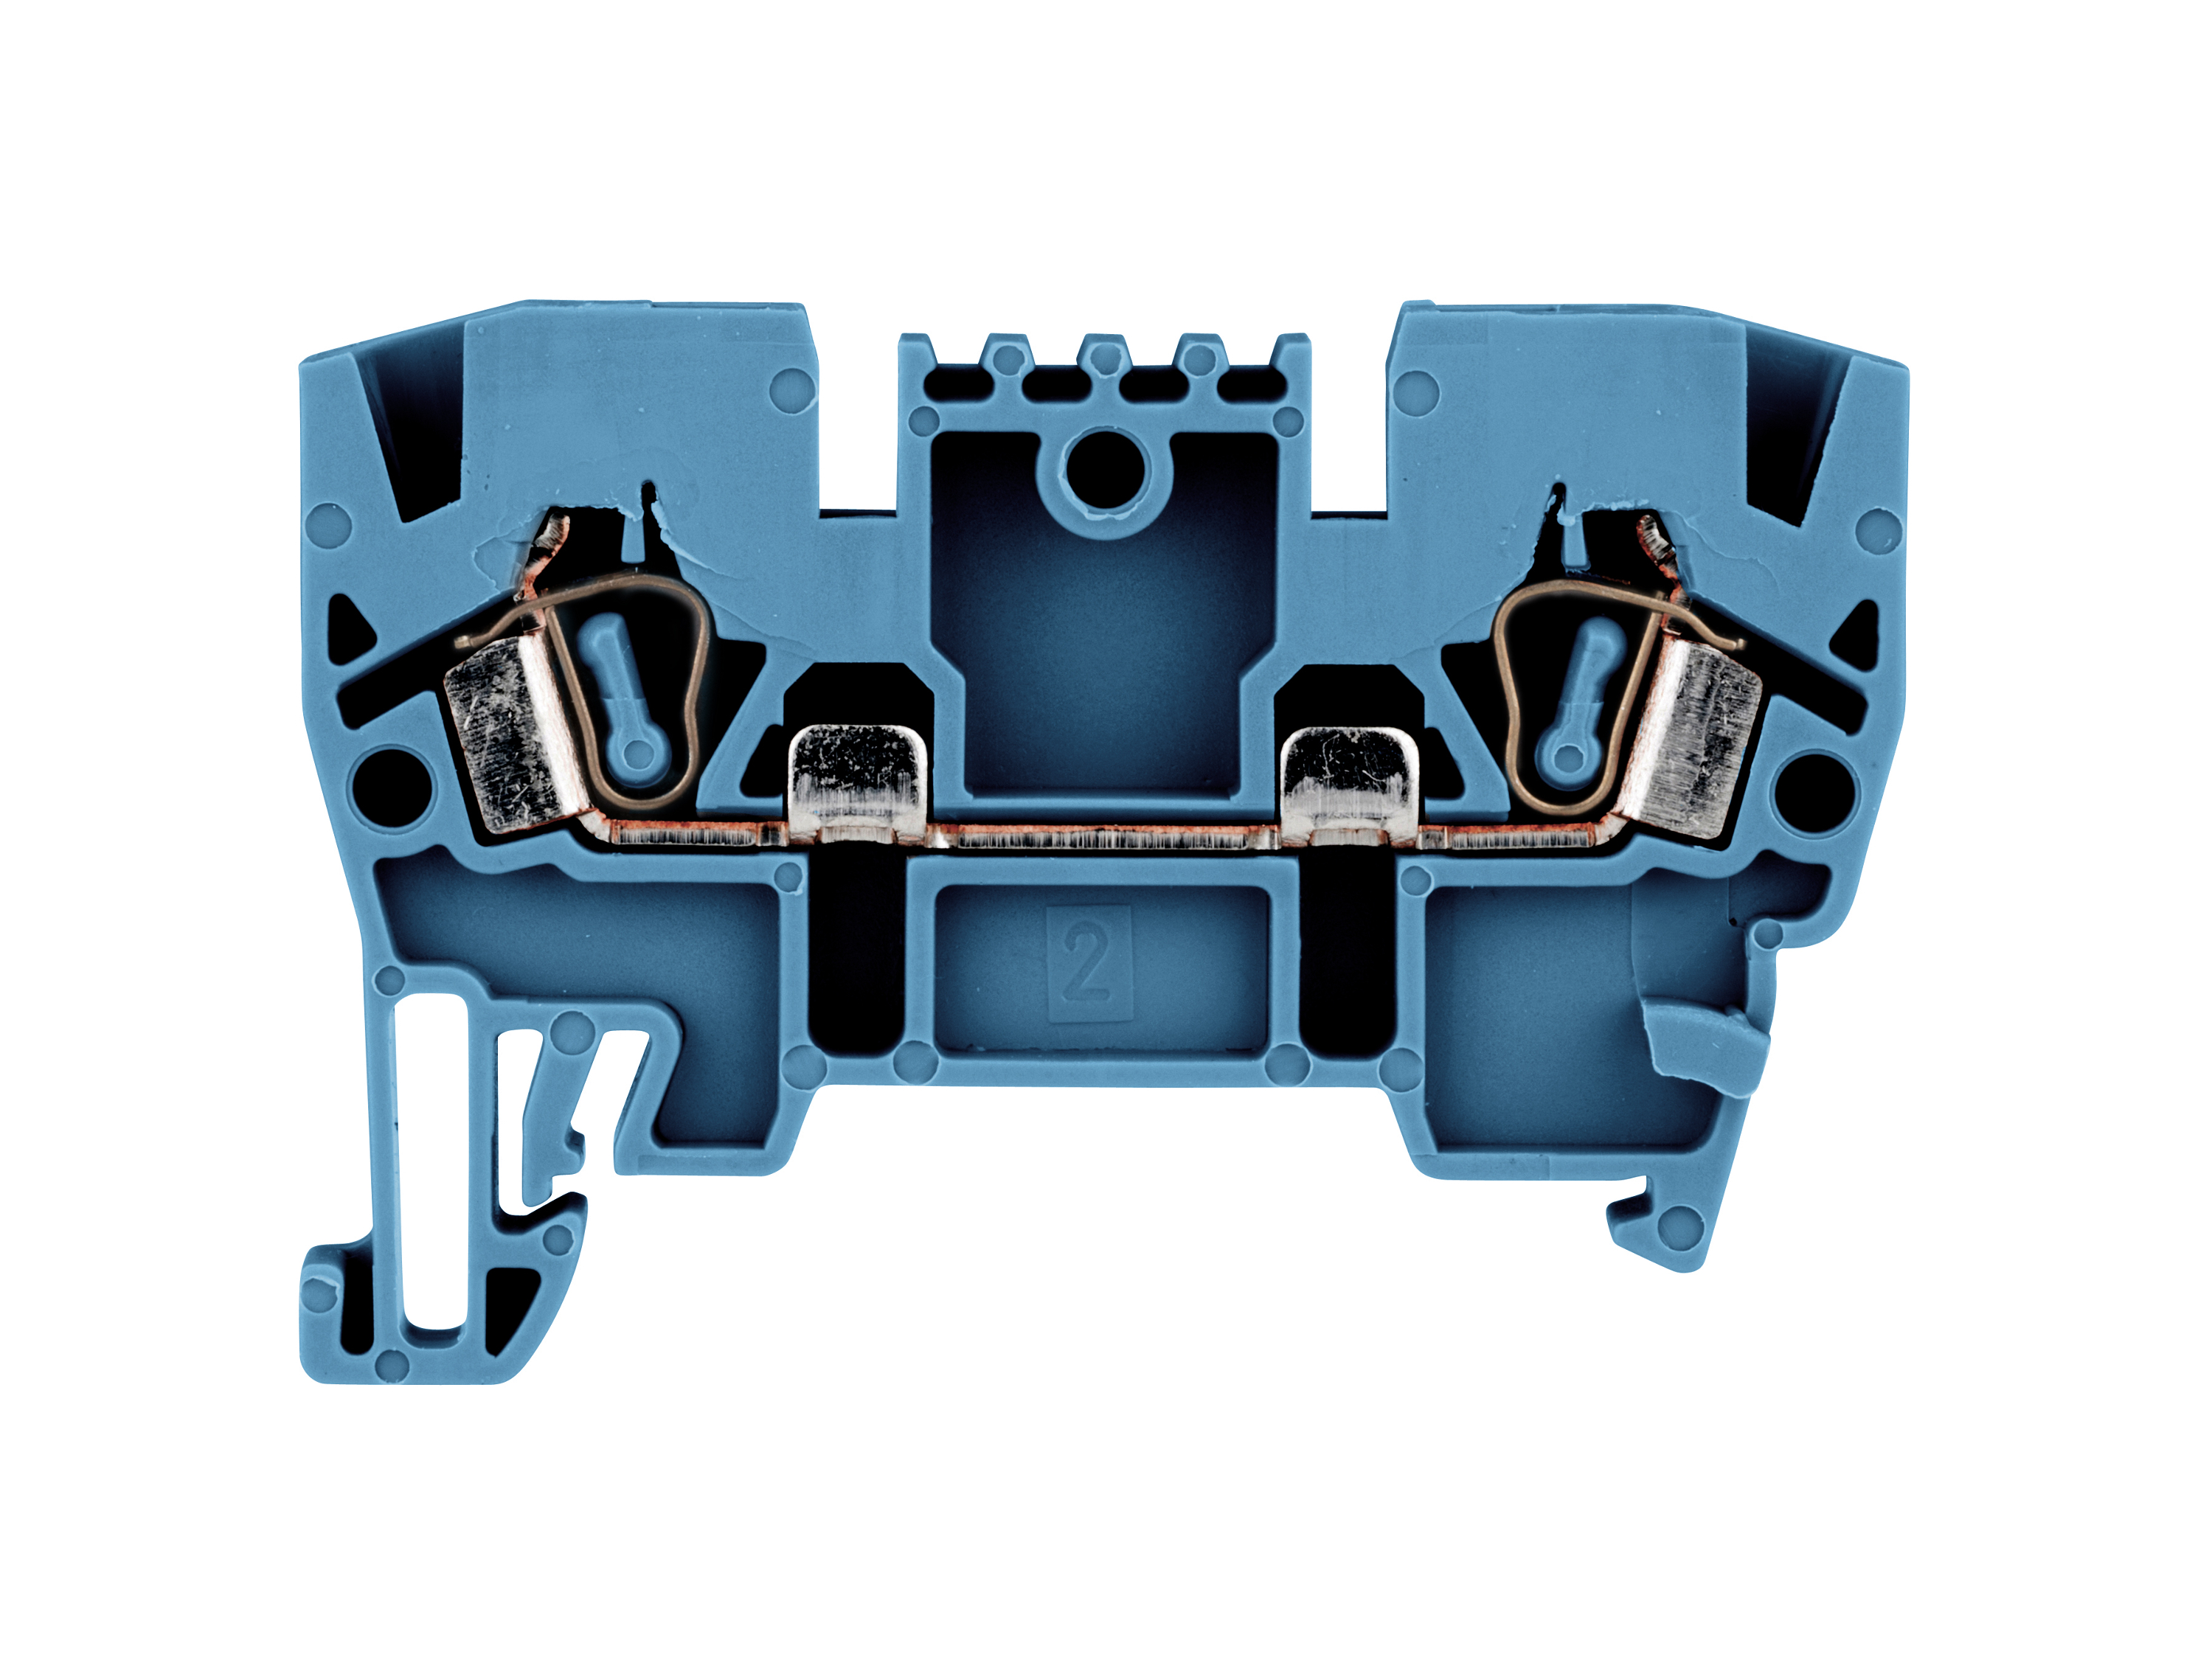 Foto: Federkraftklemme 2,5mm², Type YBK 2.5 blau (c) Schrack